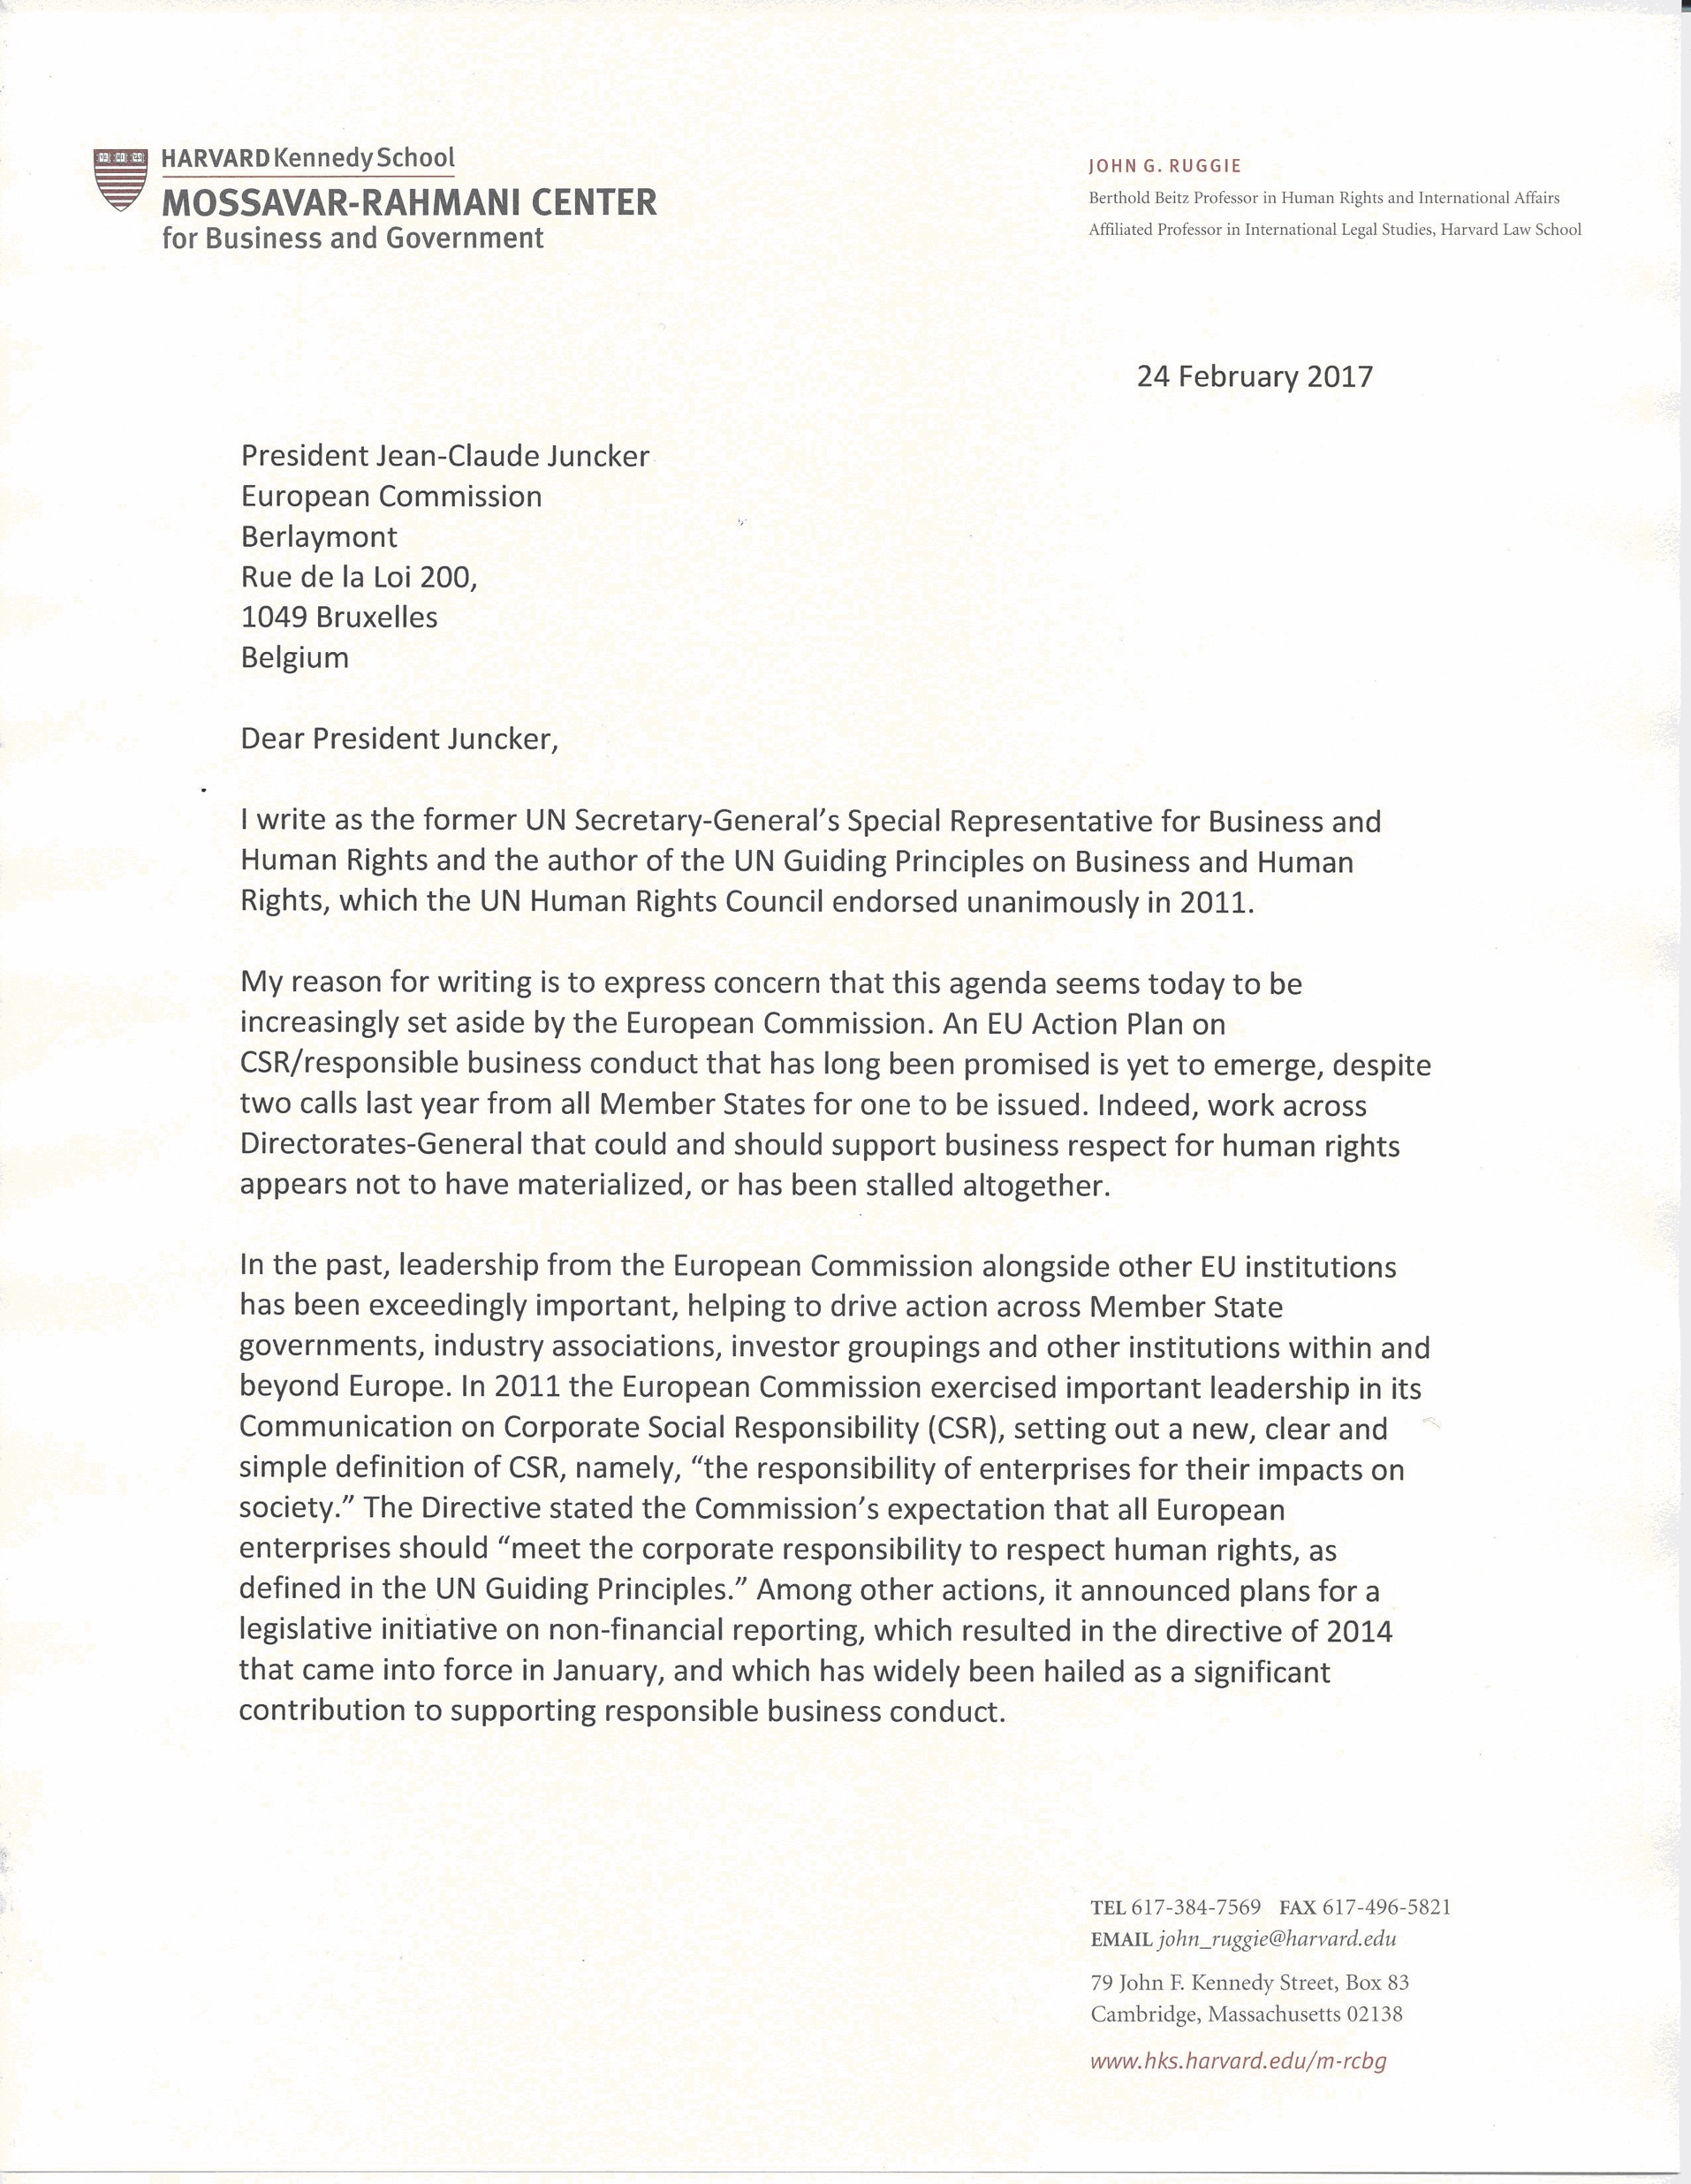 John Ruggie Letter to European Commission President Jean-Claude Juncker